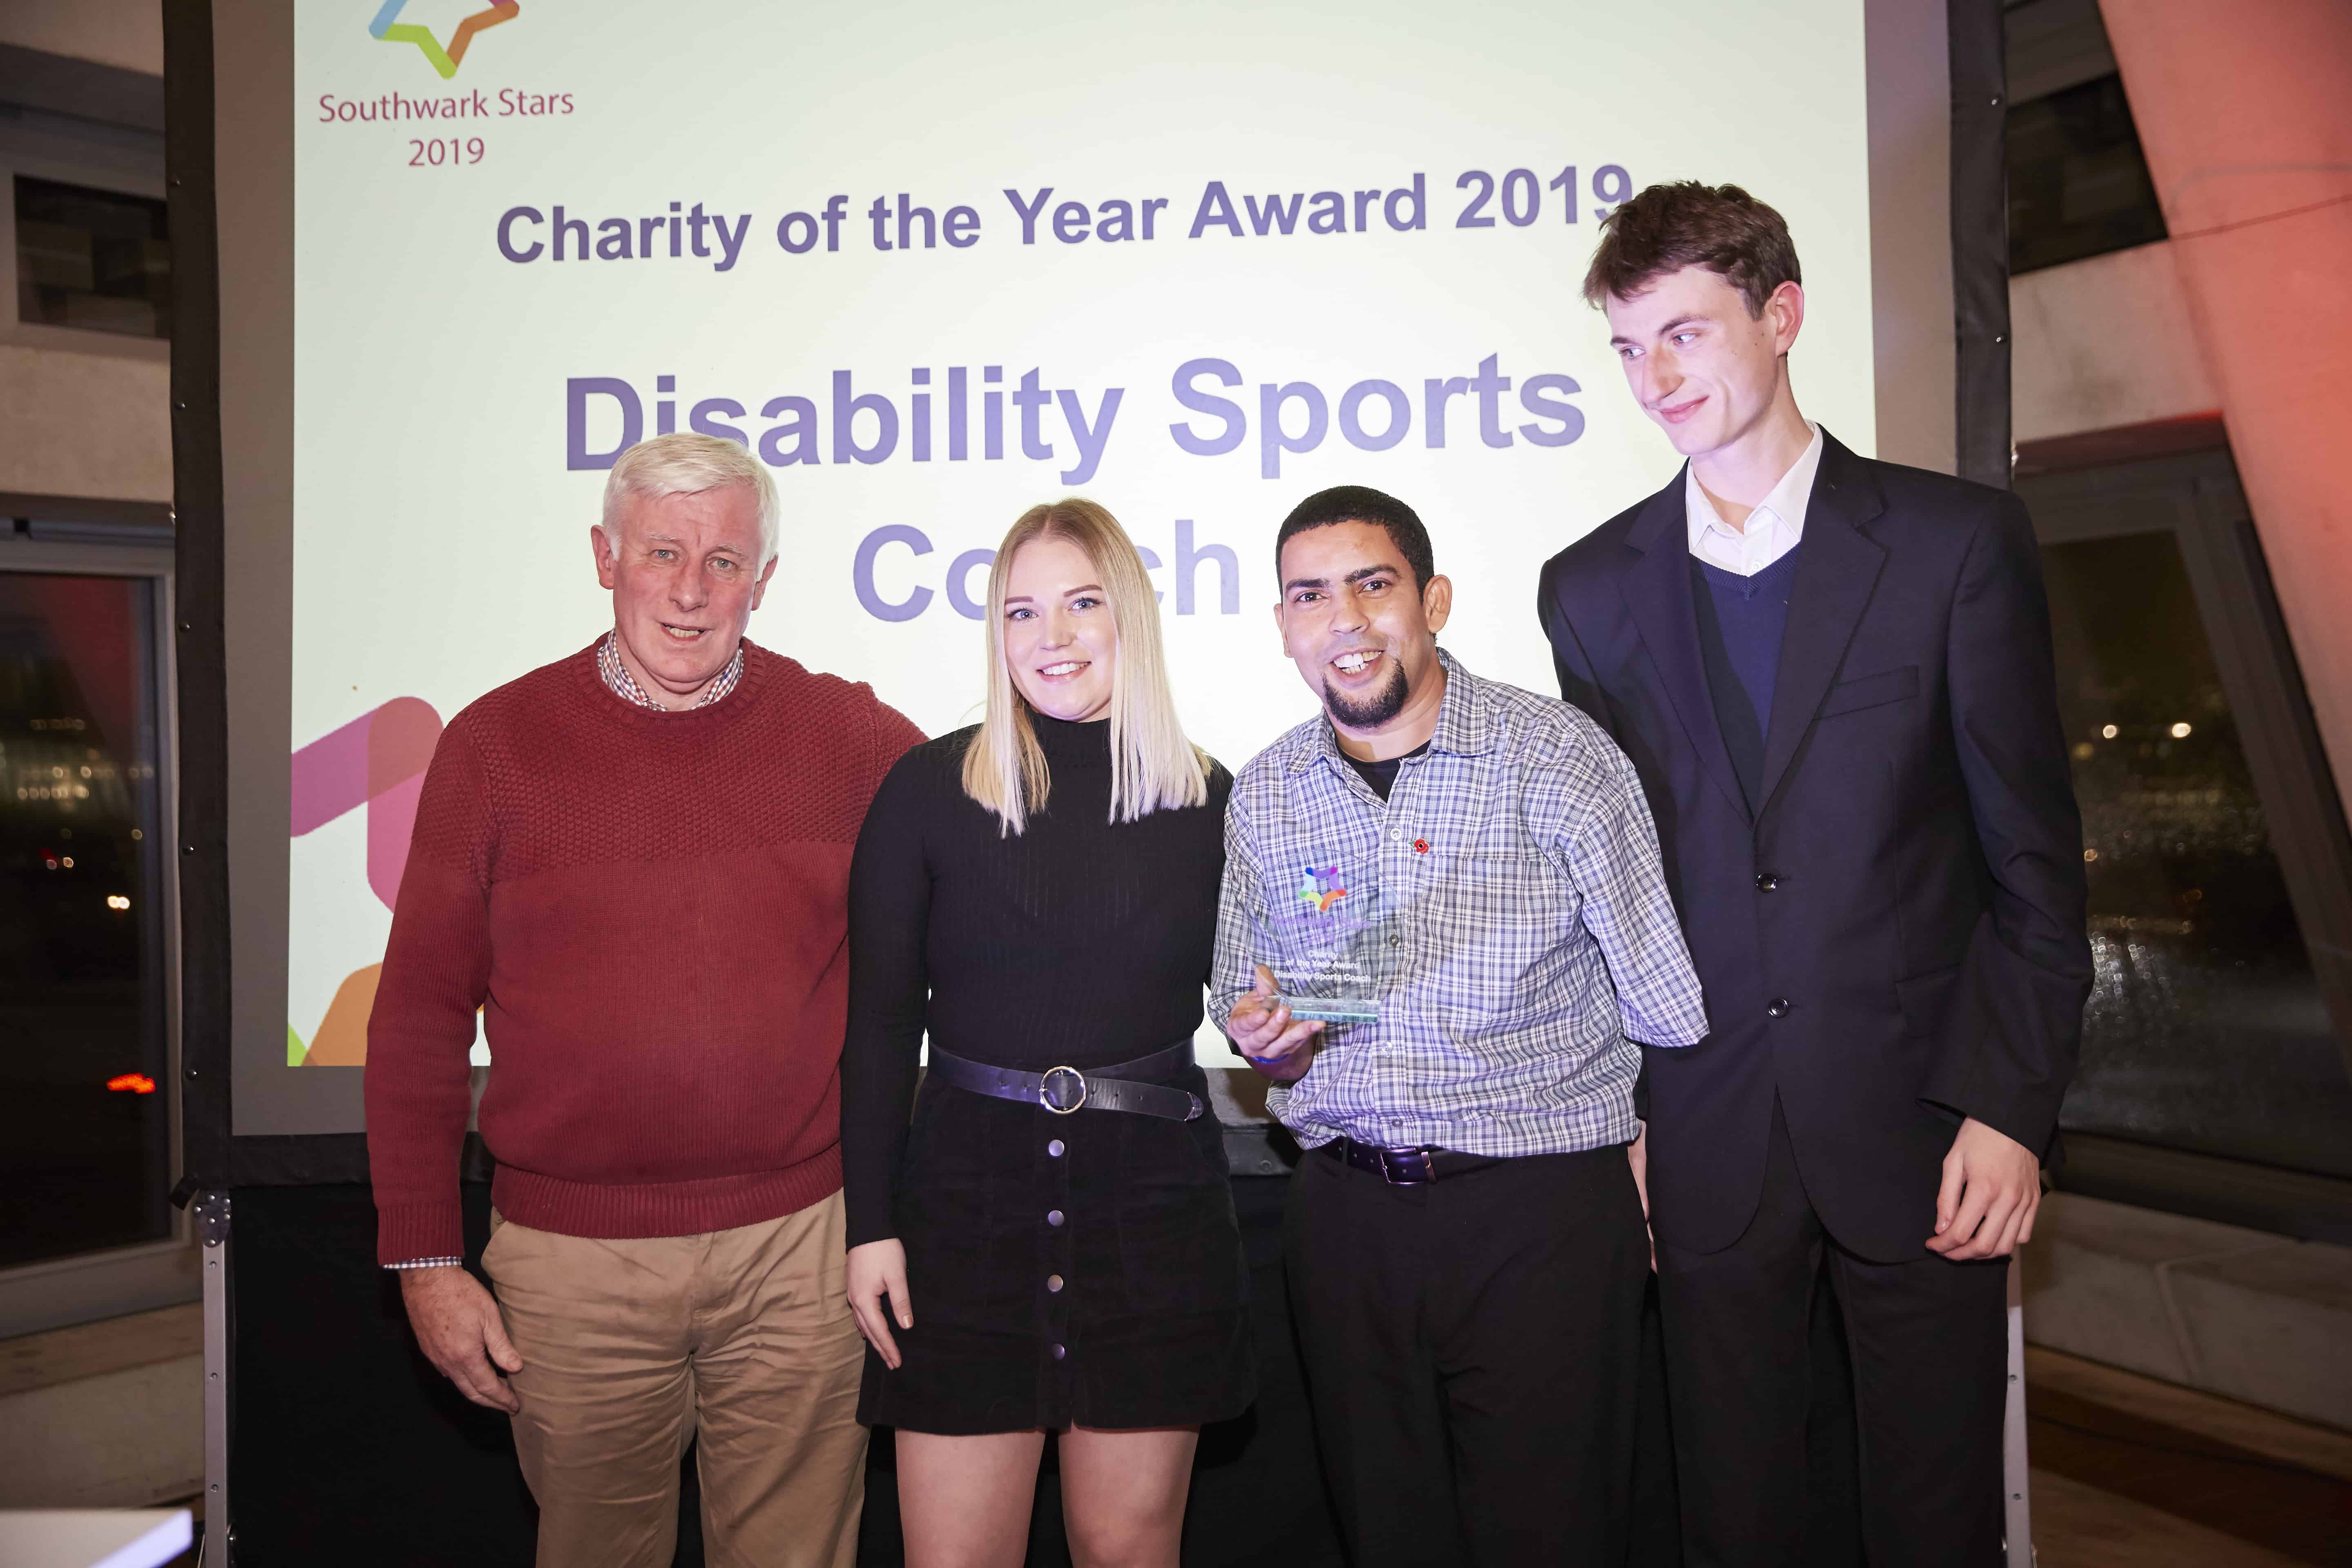 Charity of the year Award 2019 Award winner Disability Sports Coach